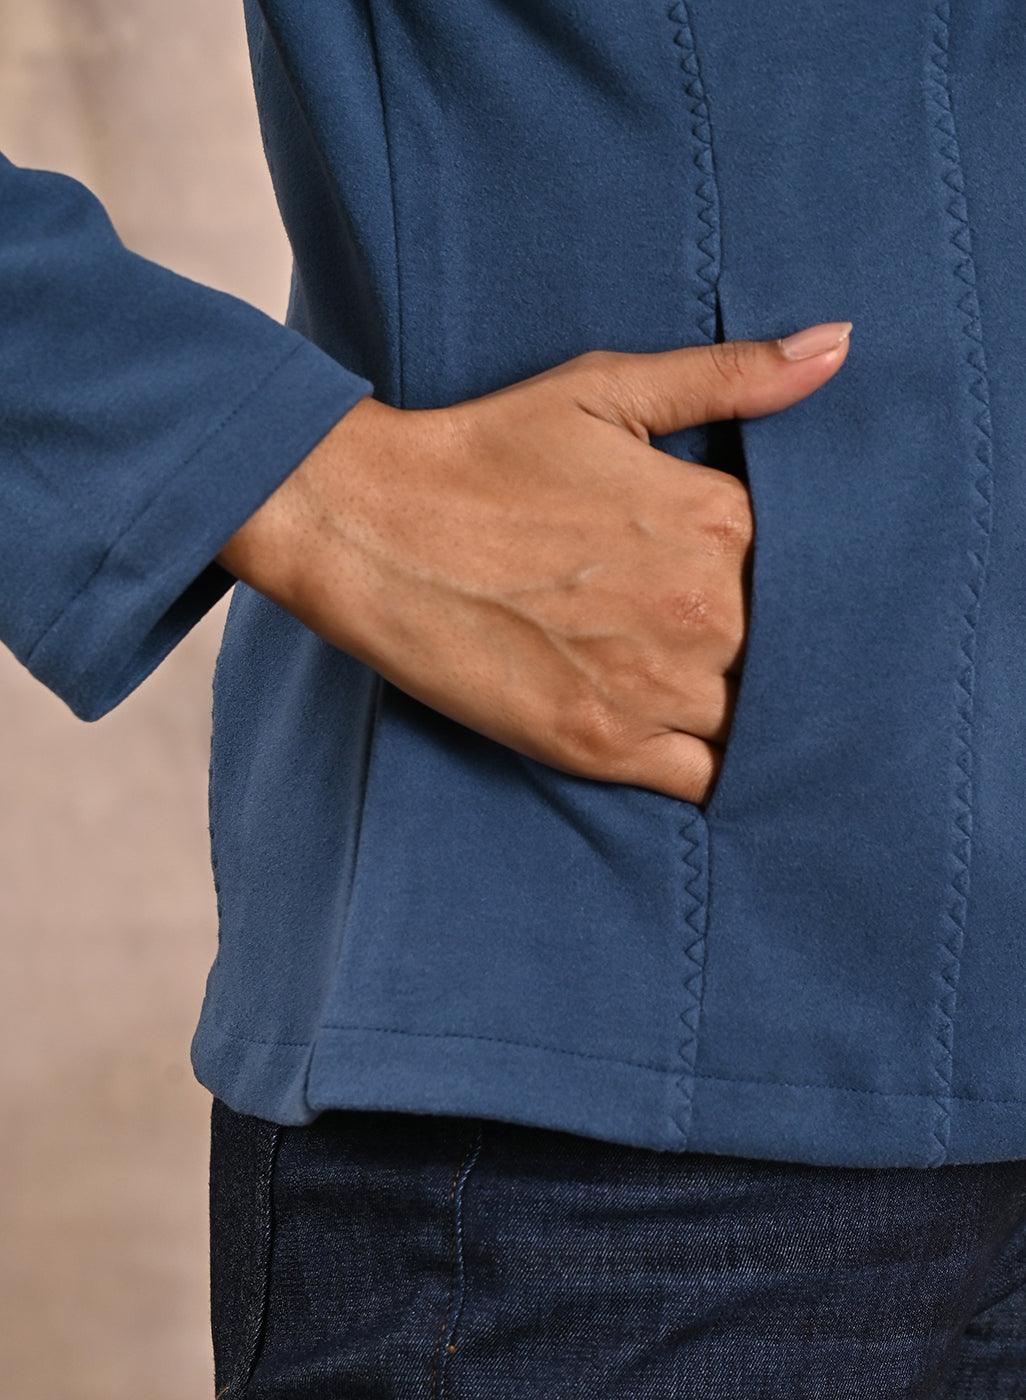 Blue Spread-neck Fleece Jacket with Zip-Closure - Lakshita